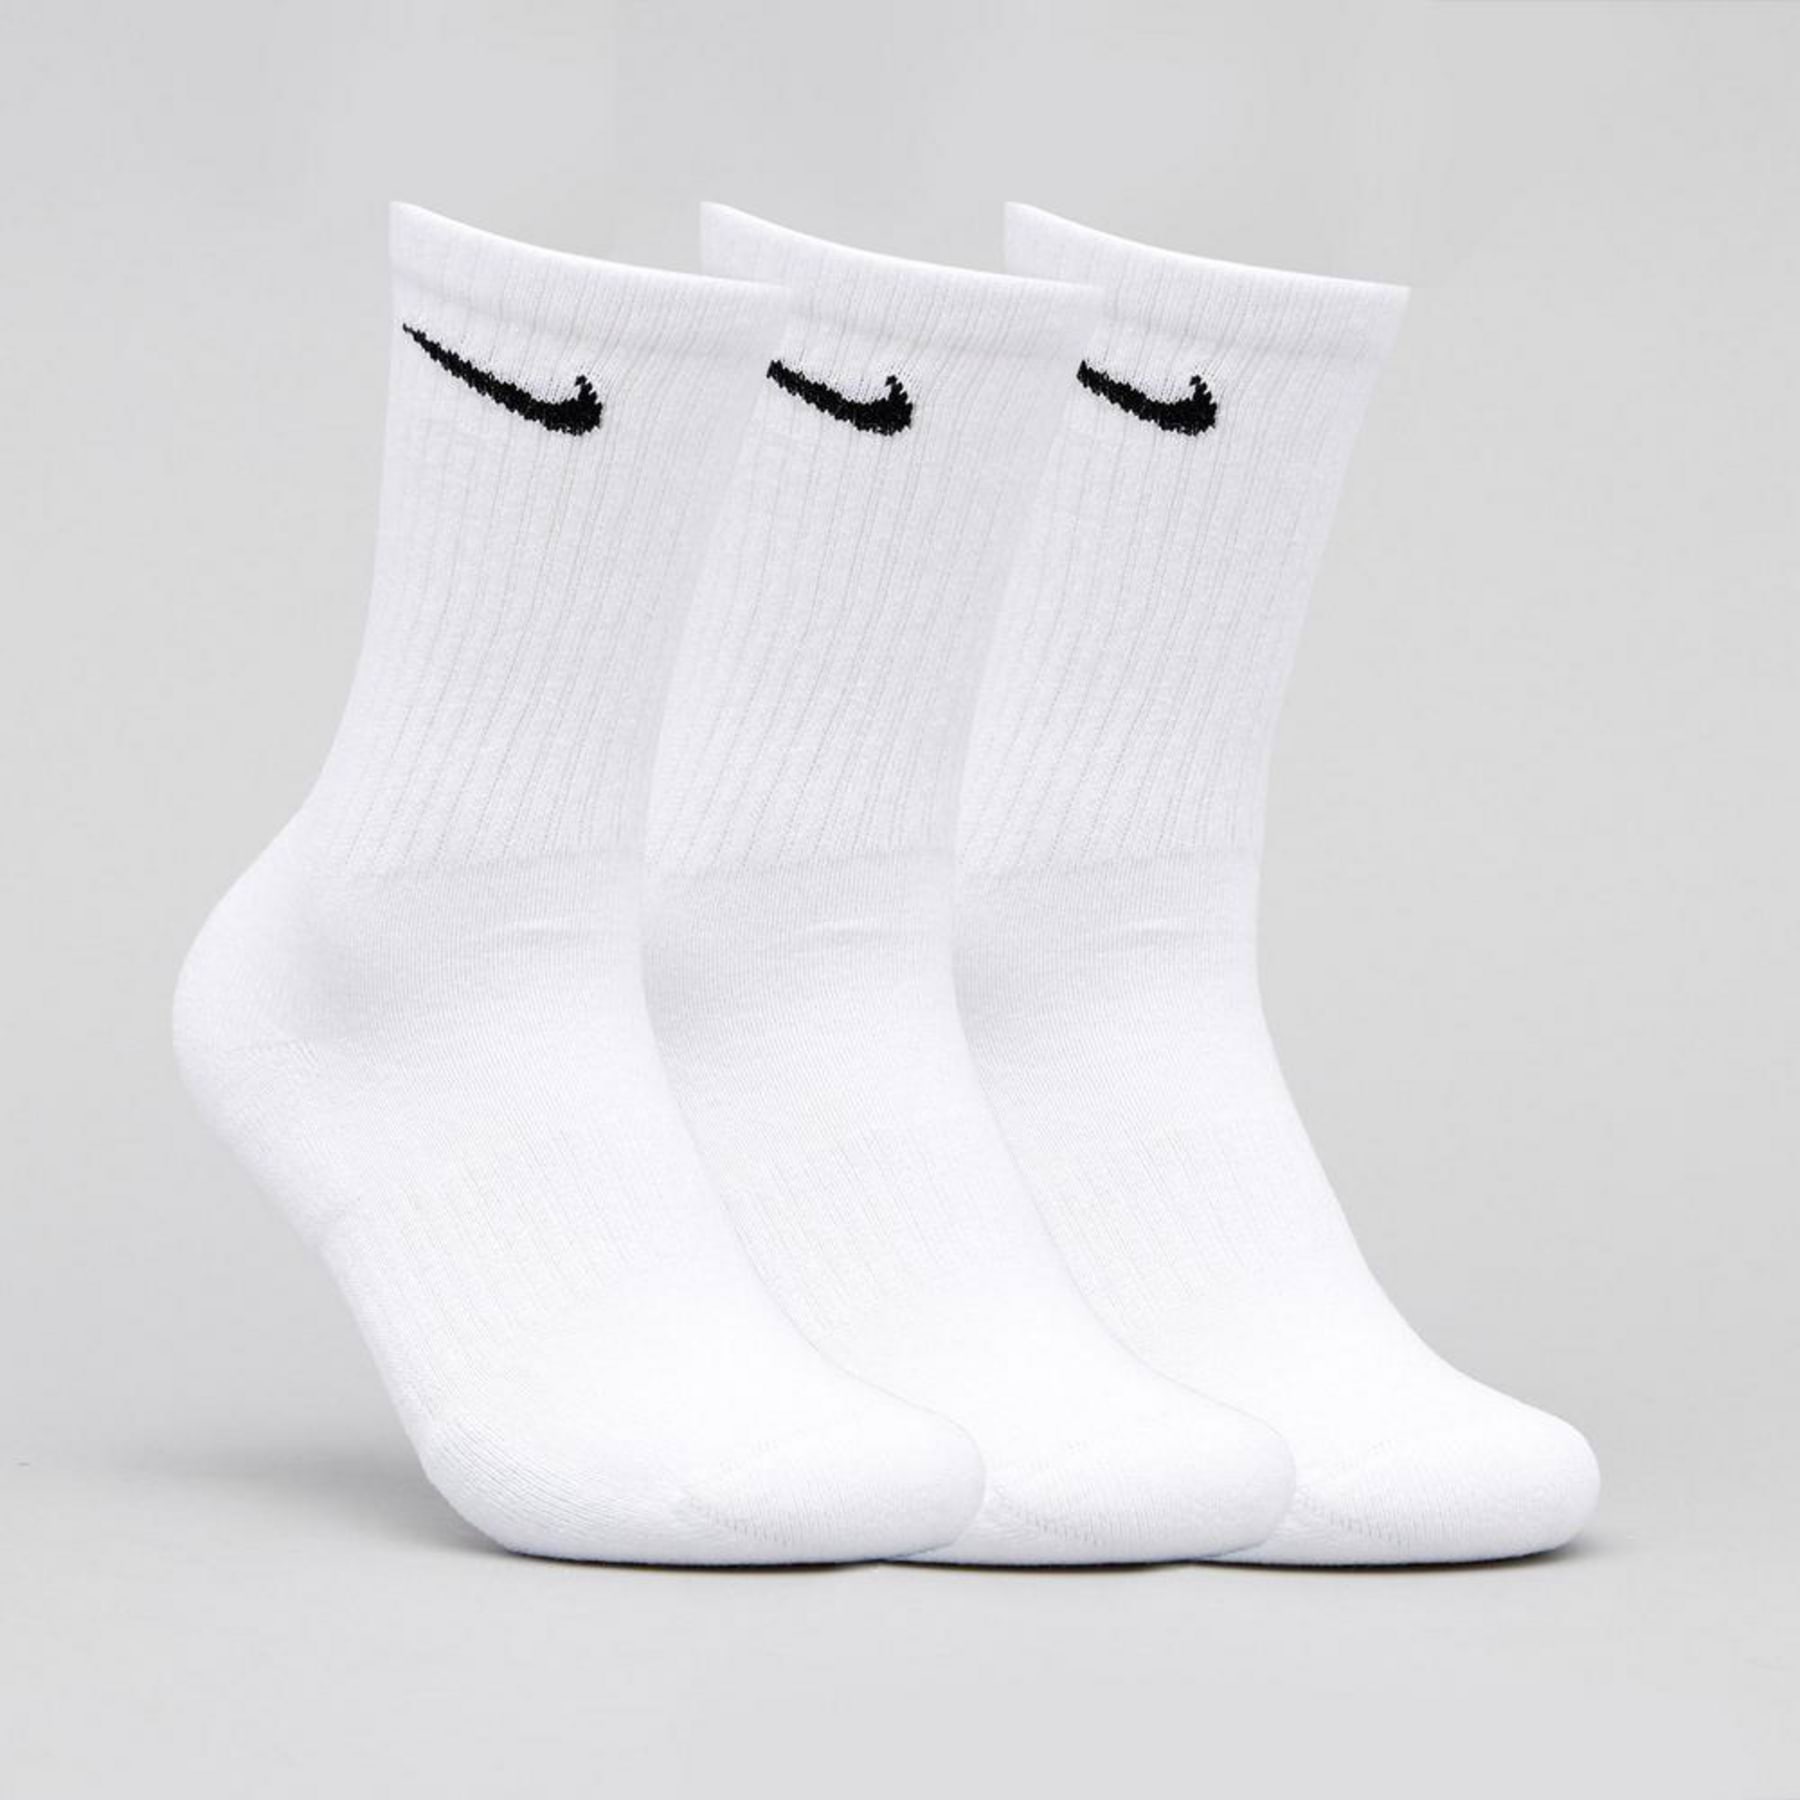 Nike Everyday Cushion Crew Socks In White/black - Fast Shipping & Easy ...